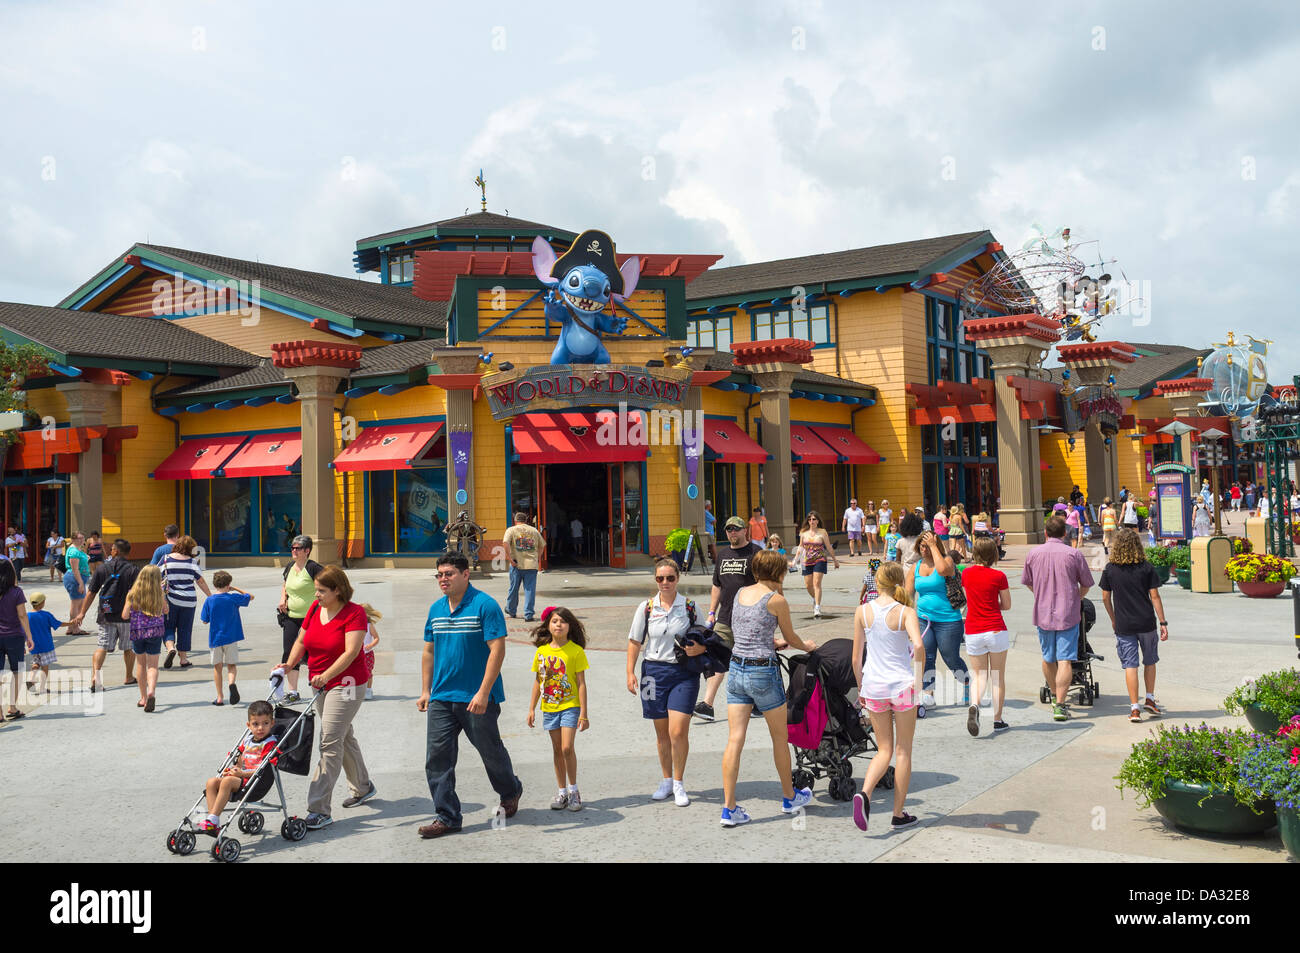 World of Disney shopping mall, Orlando, Florida, USA Stock Photo